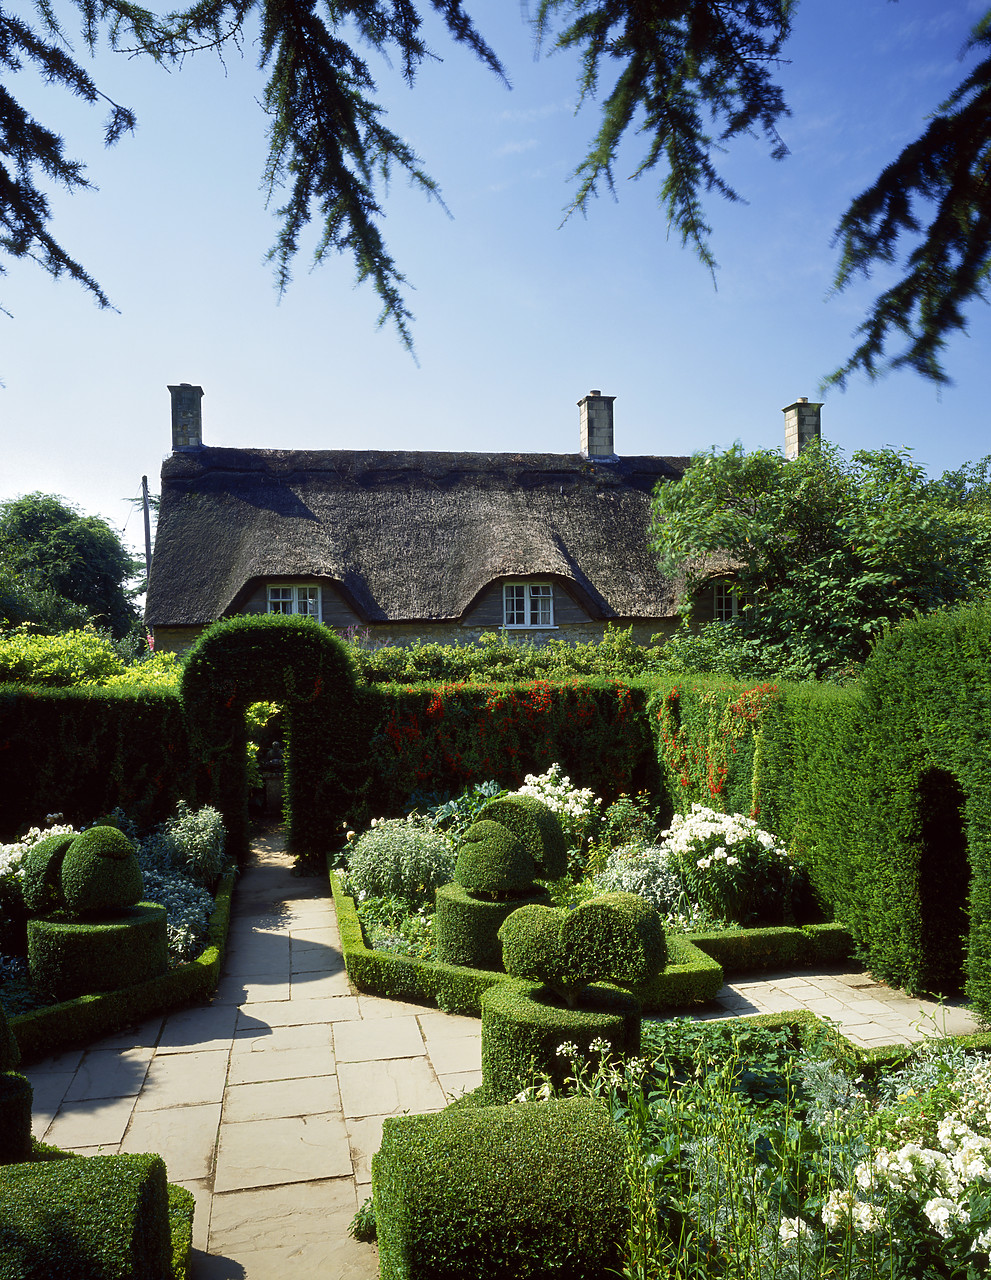 #881529-2 - The White Garden, Hidcote Manor Gardens, Gloucestershire, England